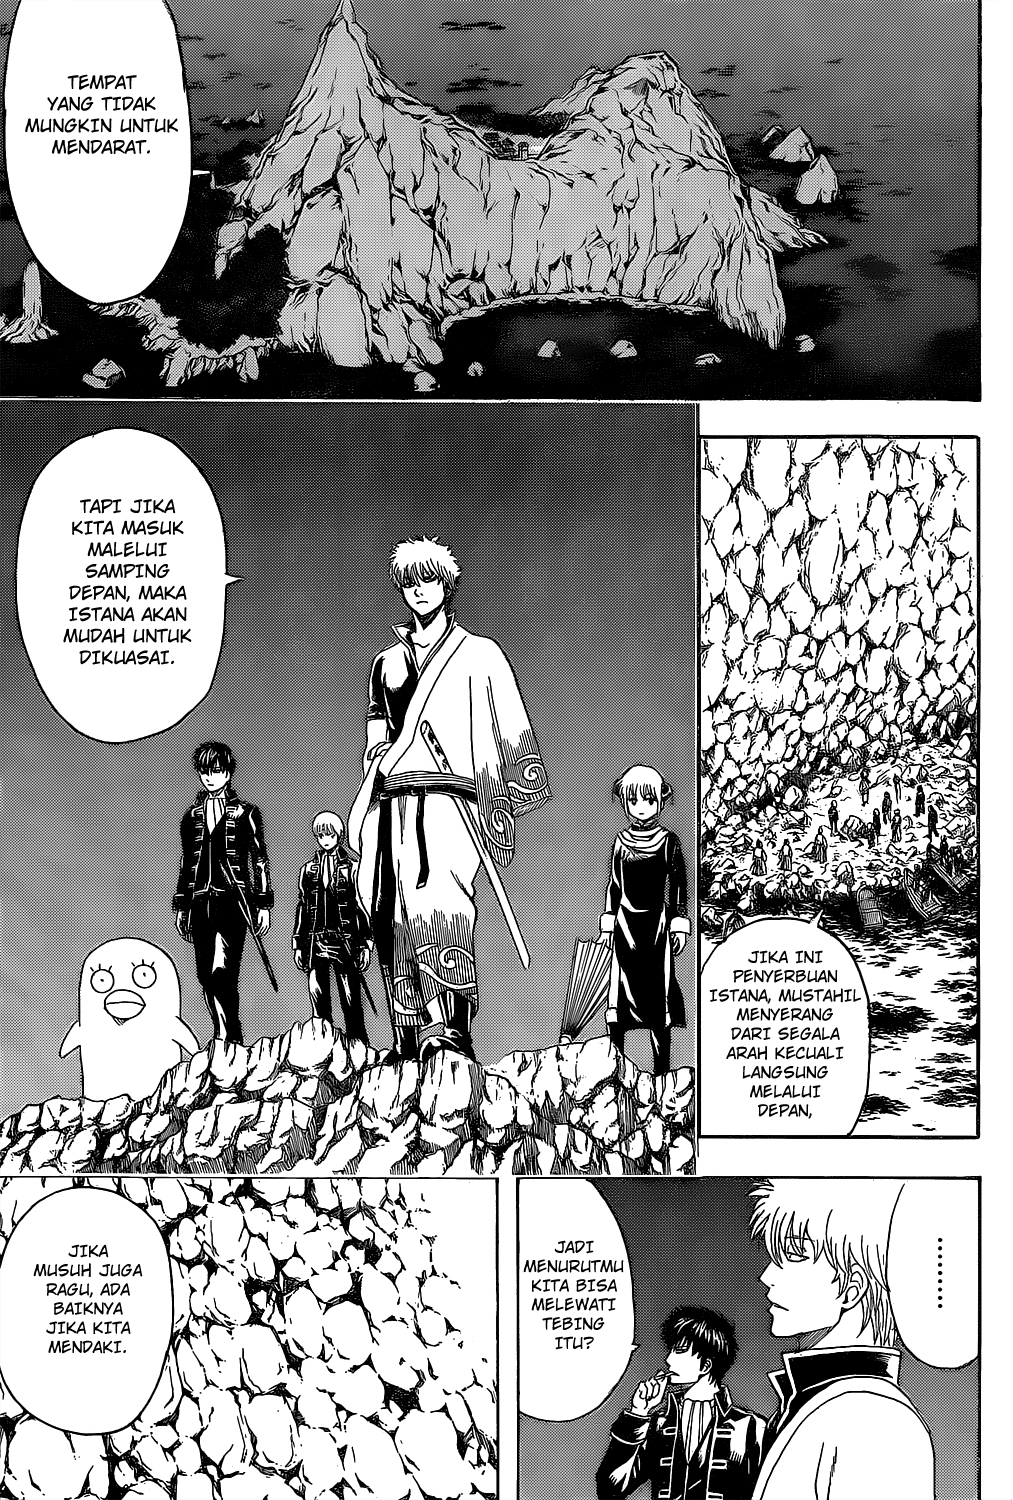 Gintama Chapter 533